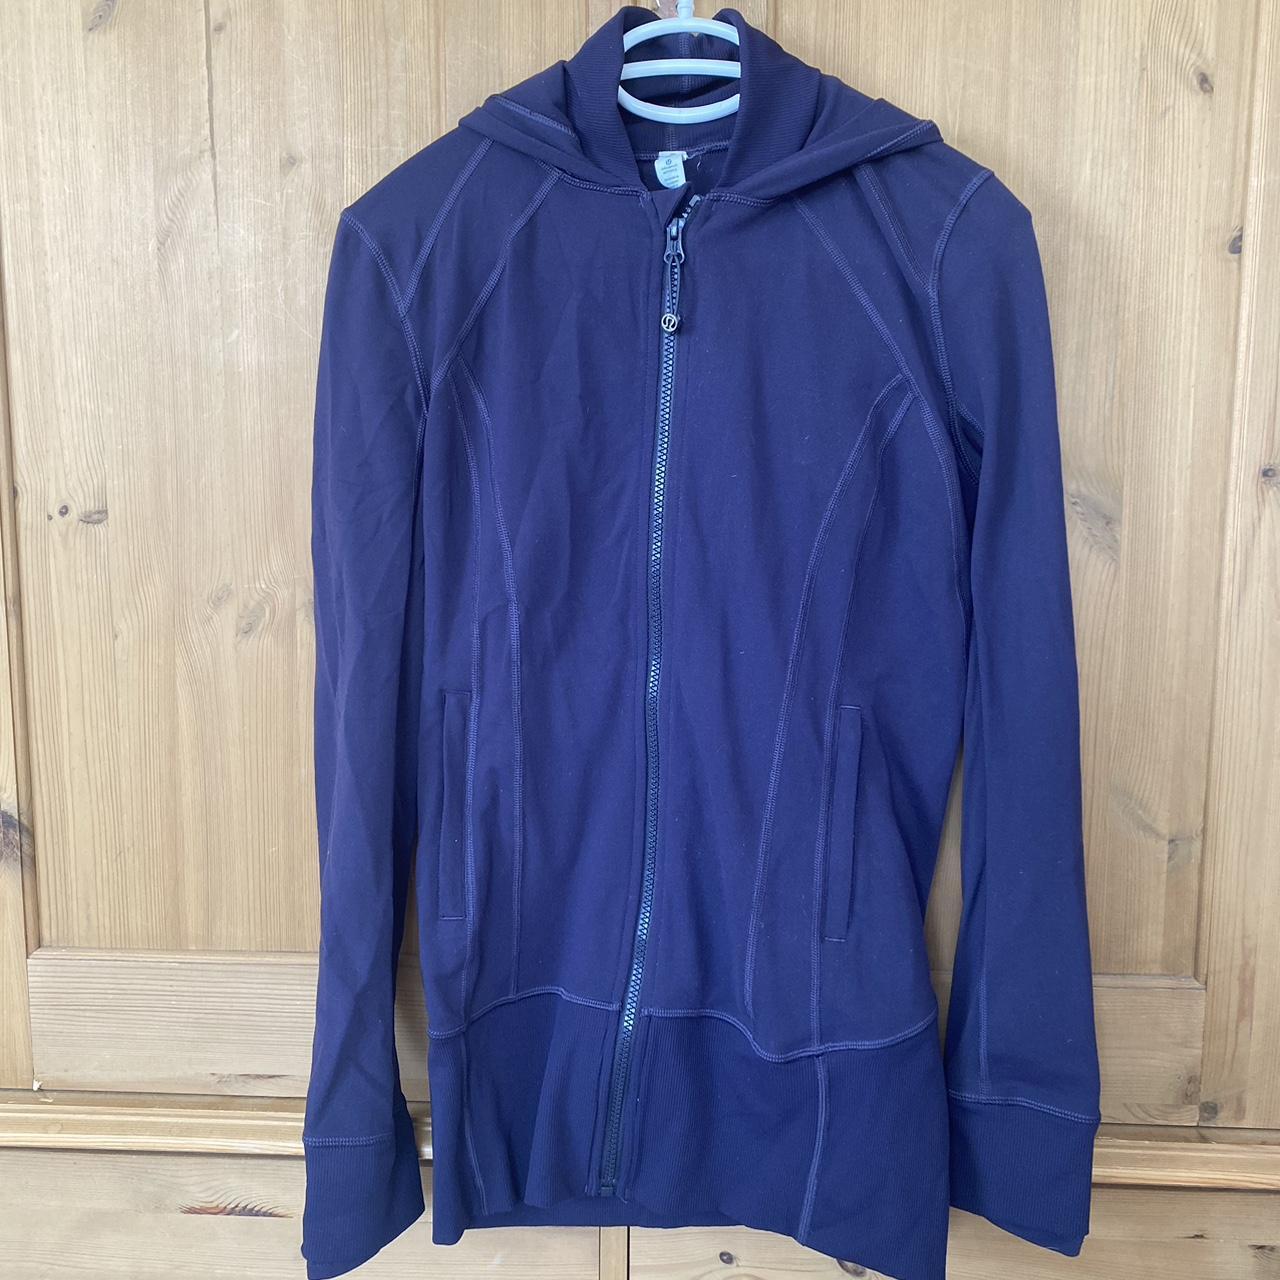 Lululemon bbl jacket Size US 6 (UK 8) RRP £98,... - Depop